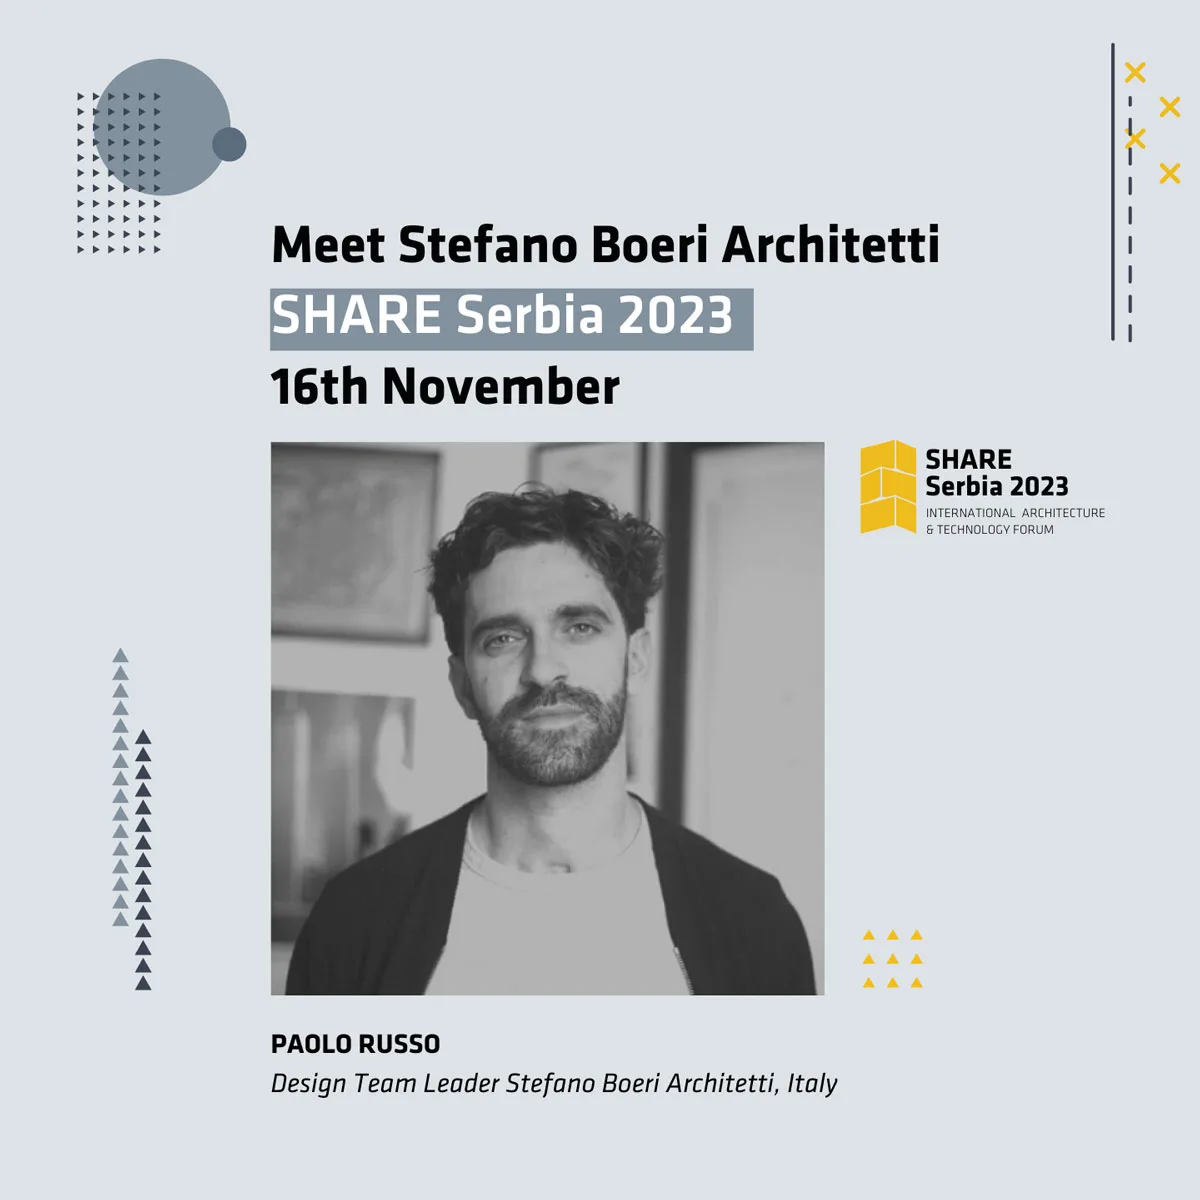 Paolo Russo lider tima za dizajn u kompaniji Stefano Boeri Architetti, govornik na SHARE Serbia 2023